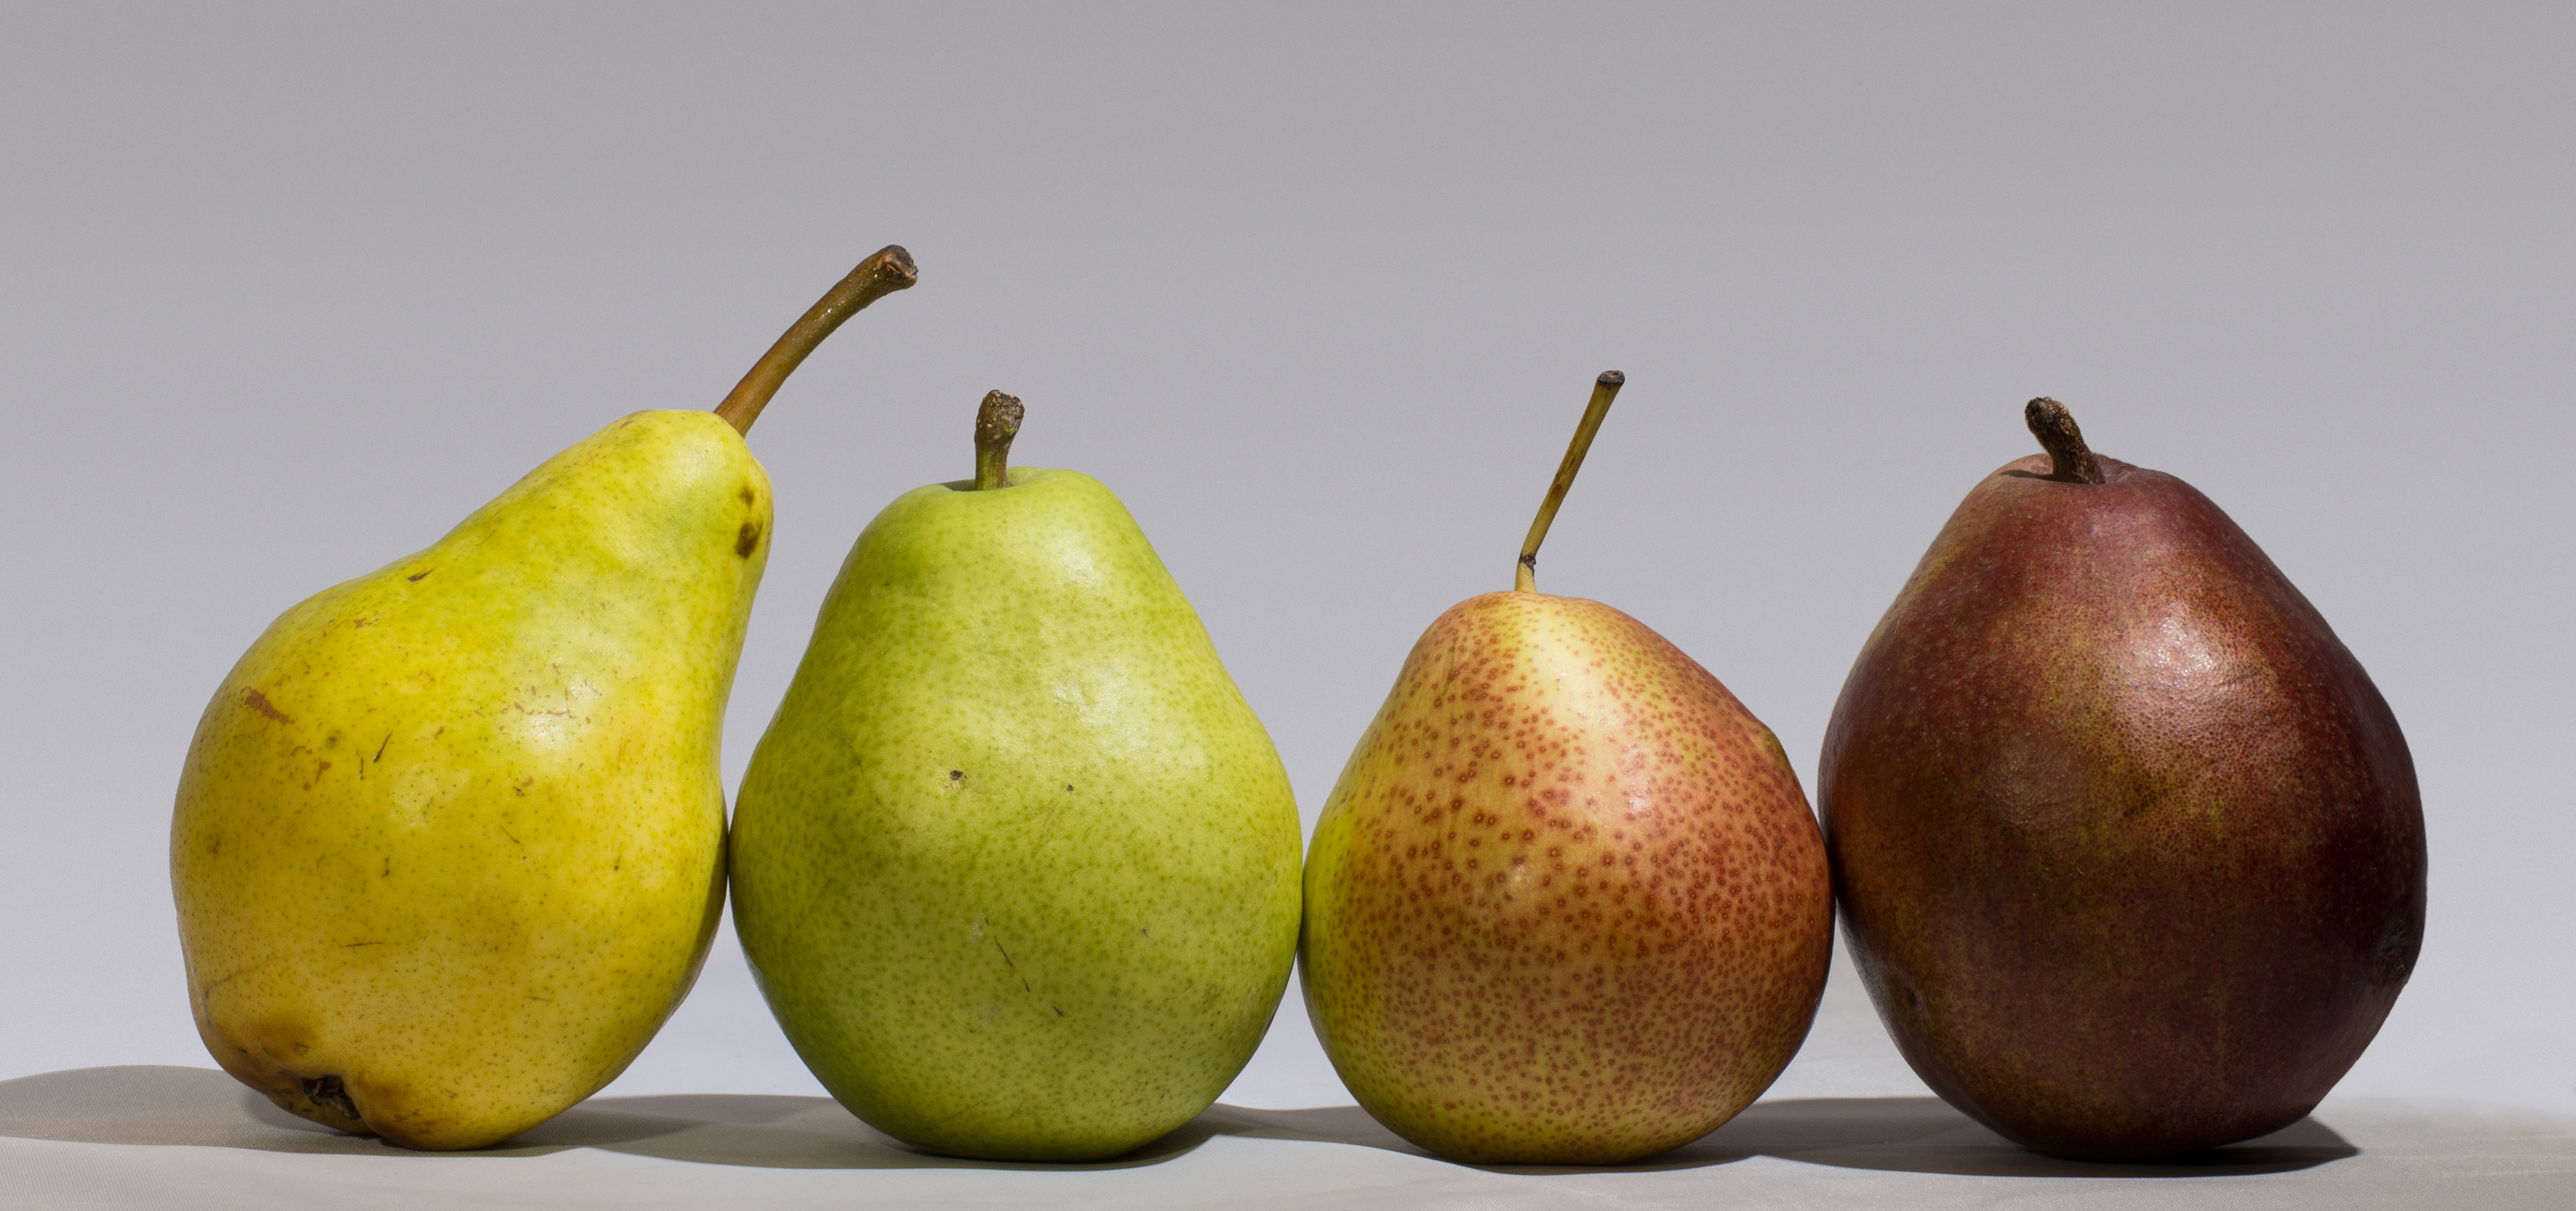 File:Four pears.jpg - Wikimedia Commons